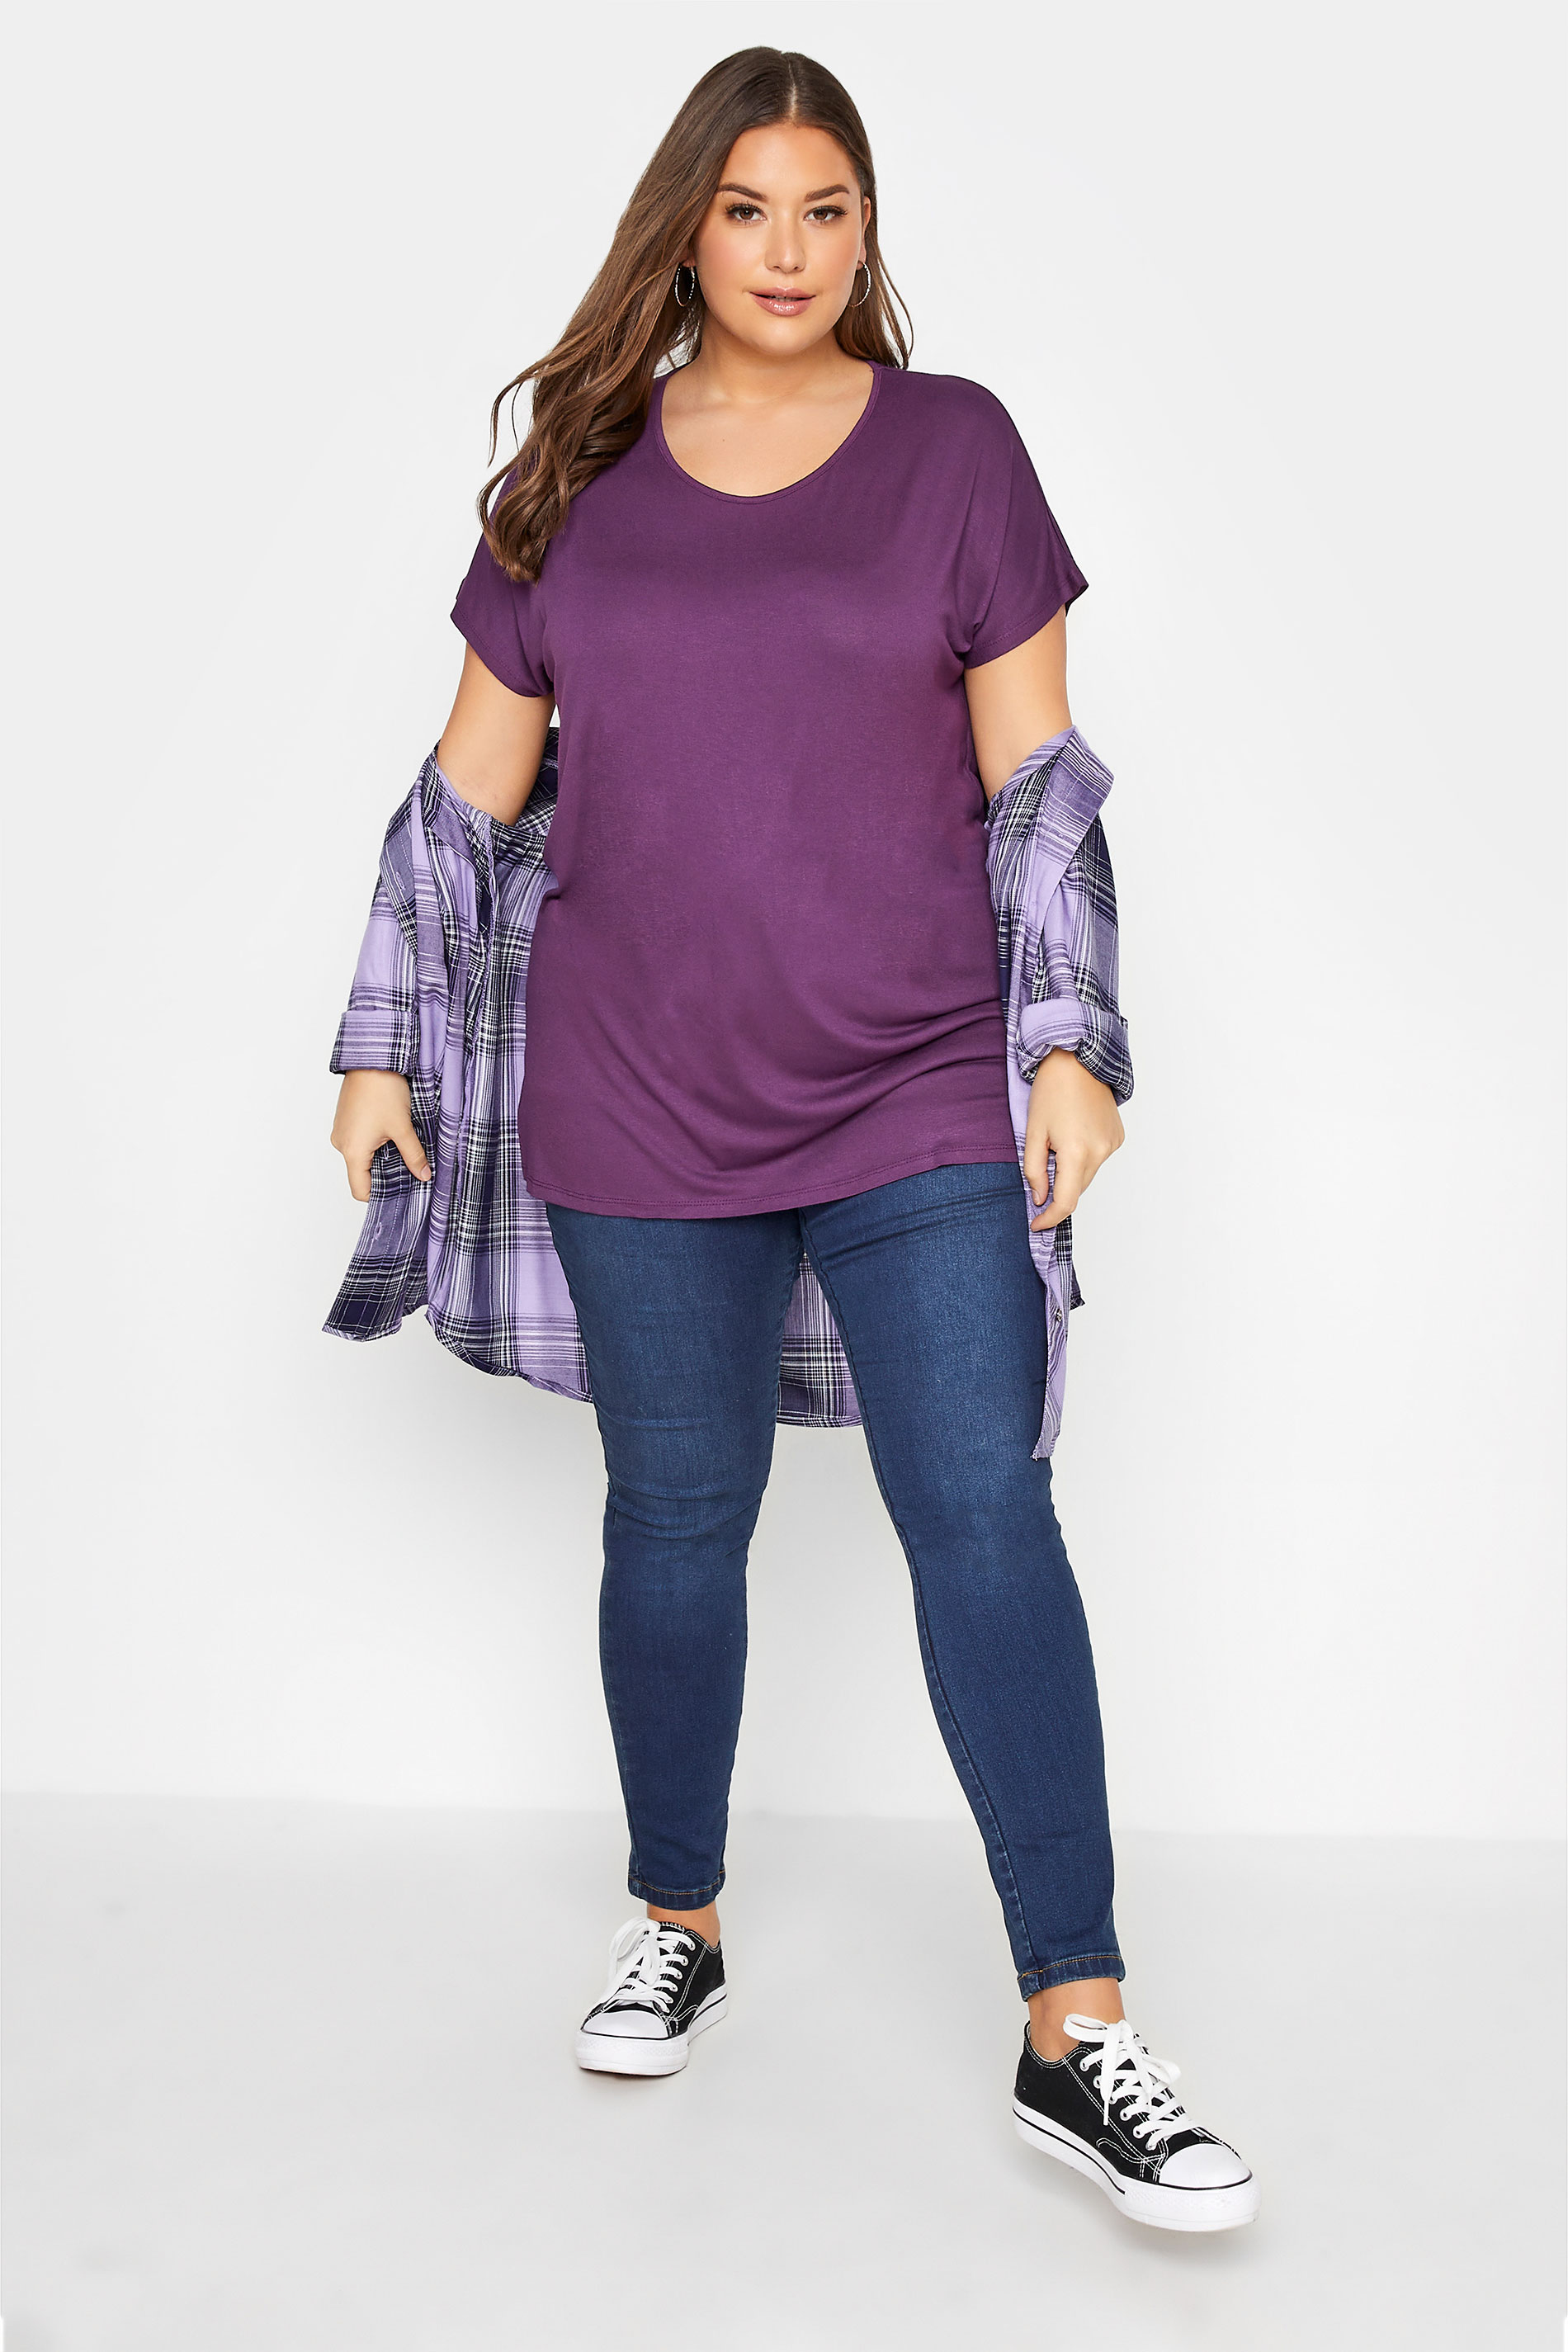 Grande taille  Tops Grande taille  T-Shirts | T-Shirt Violet Ourlet Plongeant - OG24997